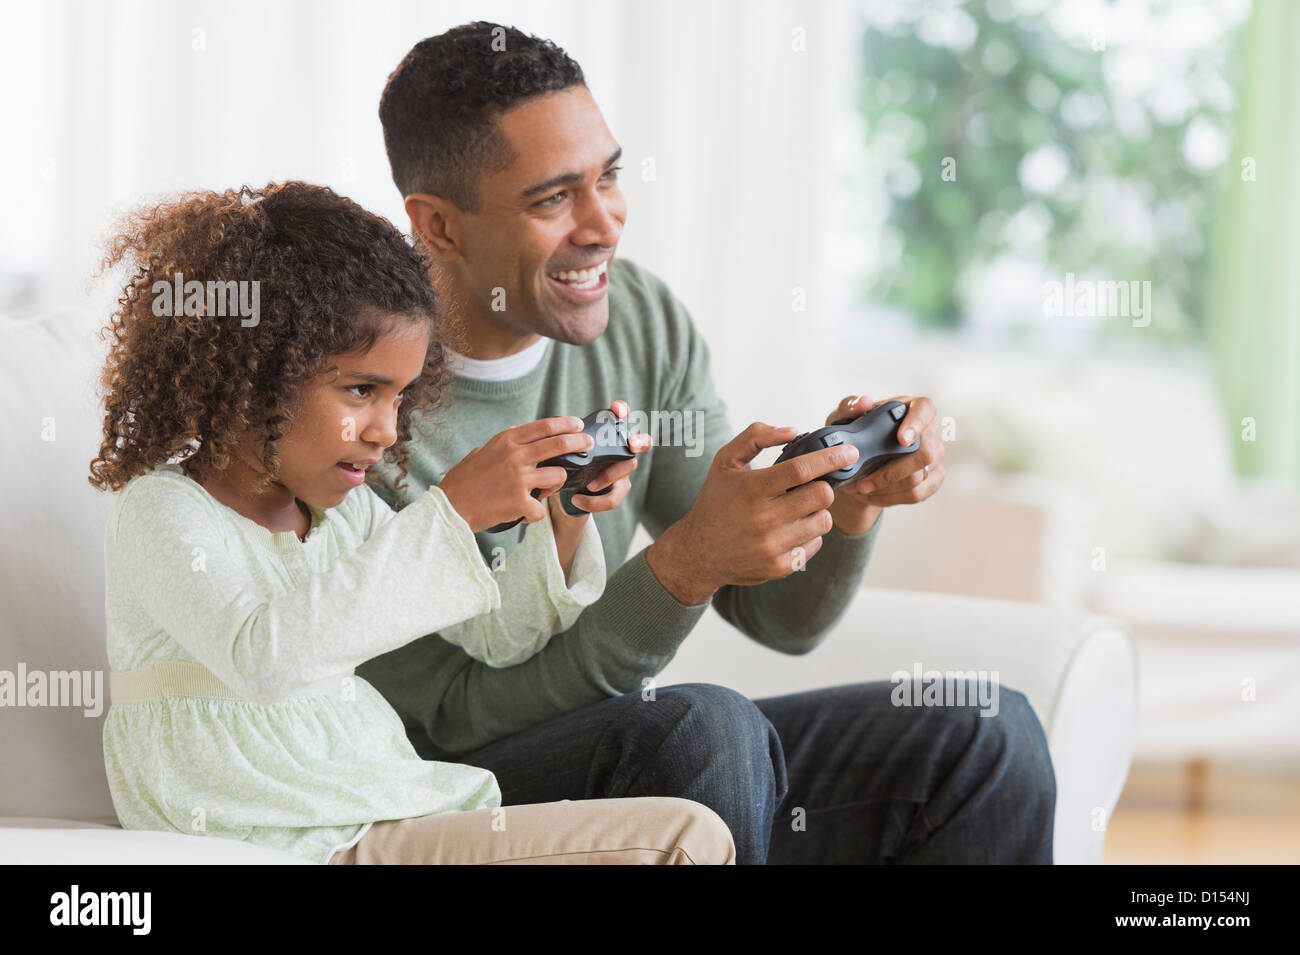 USA, New Jersey, Jersey City, Vater und Tochter (6-7) video Spiel Stockfoto